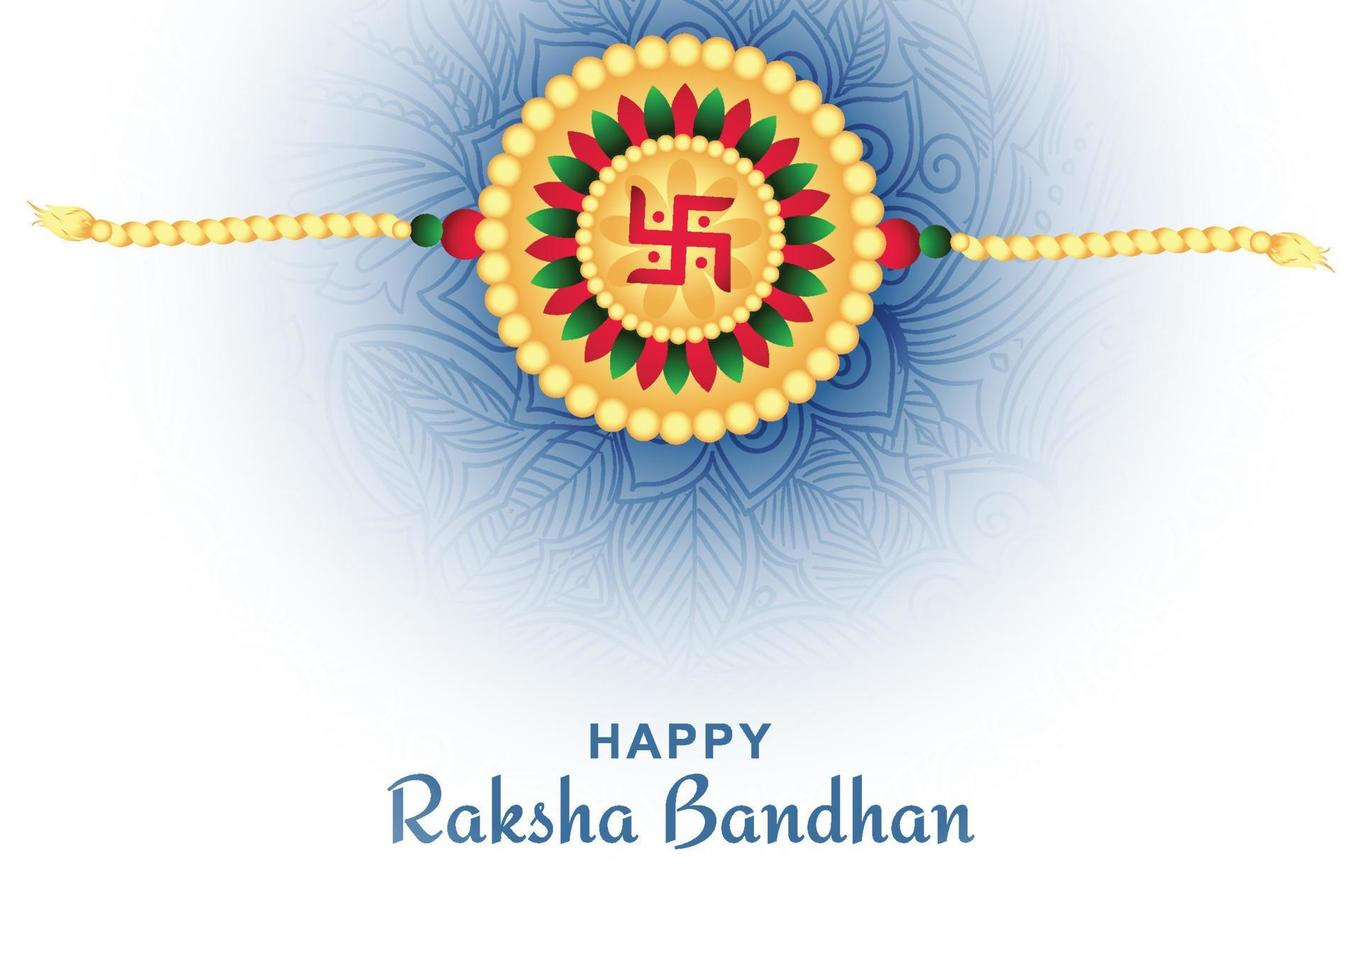 bellissimo rakhi decorativo per lo sfondo della carta raksha bandhan banner festival indiano vettore